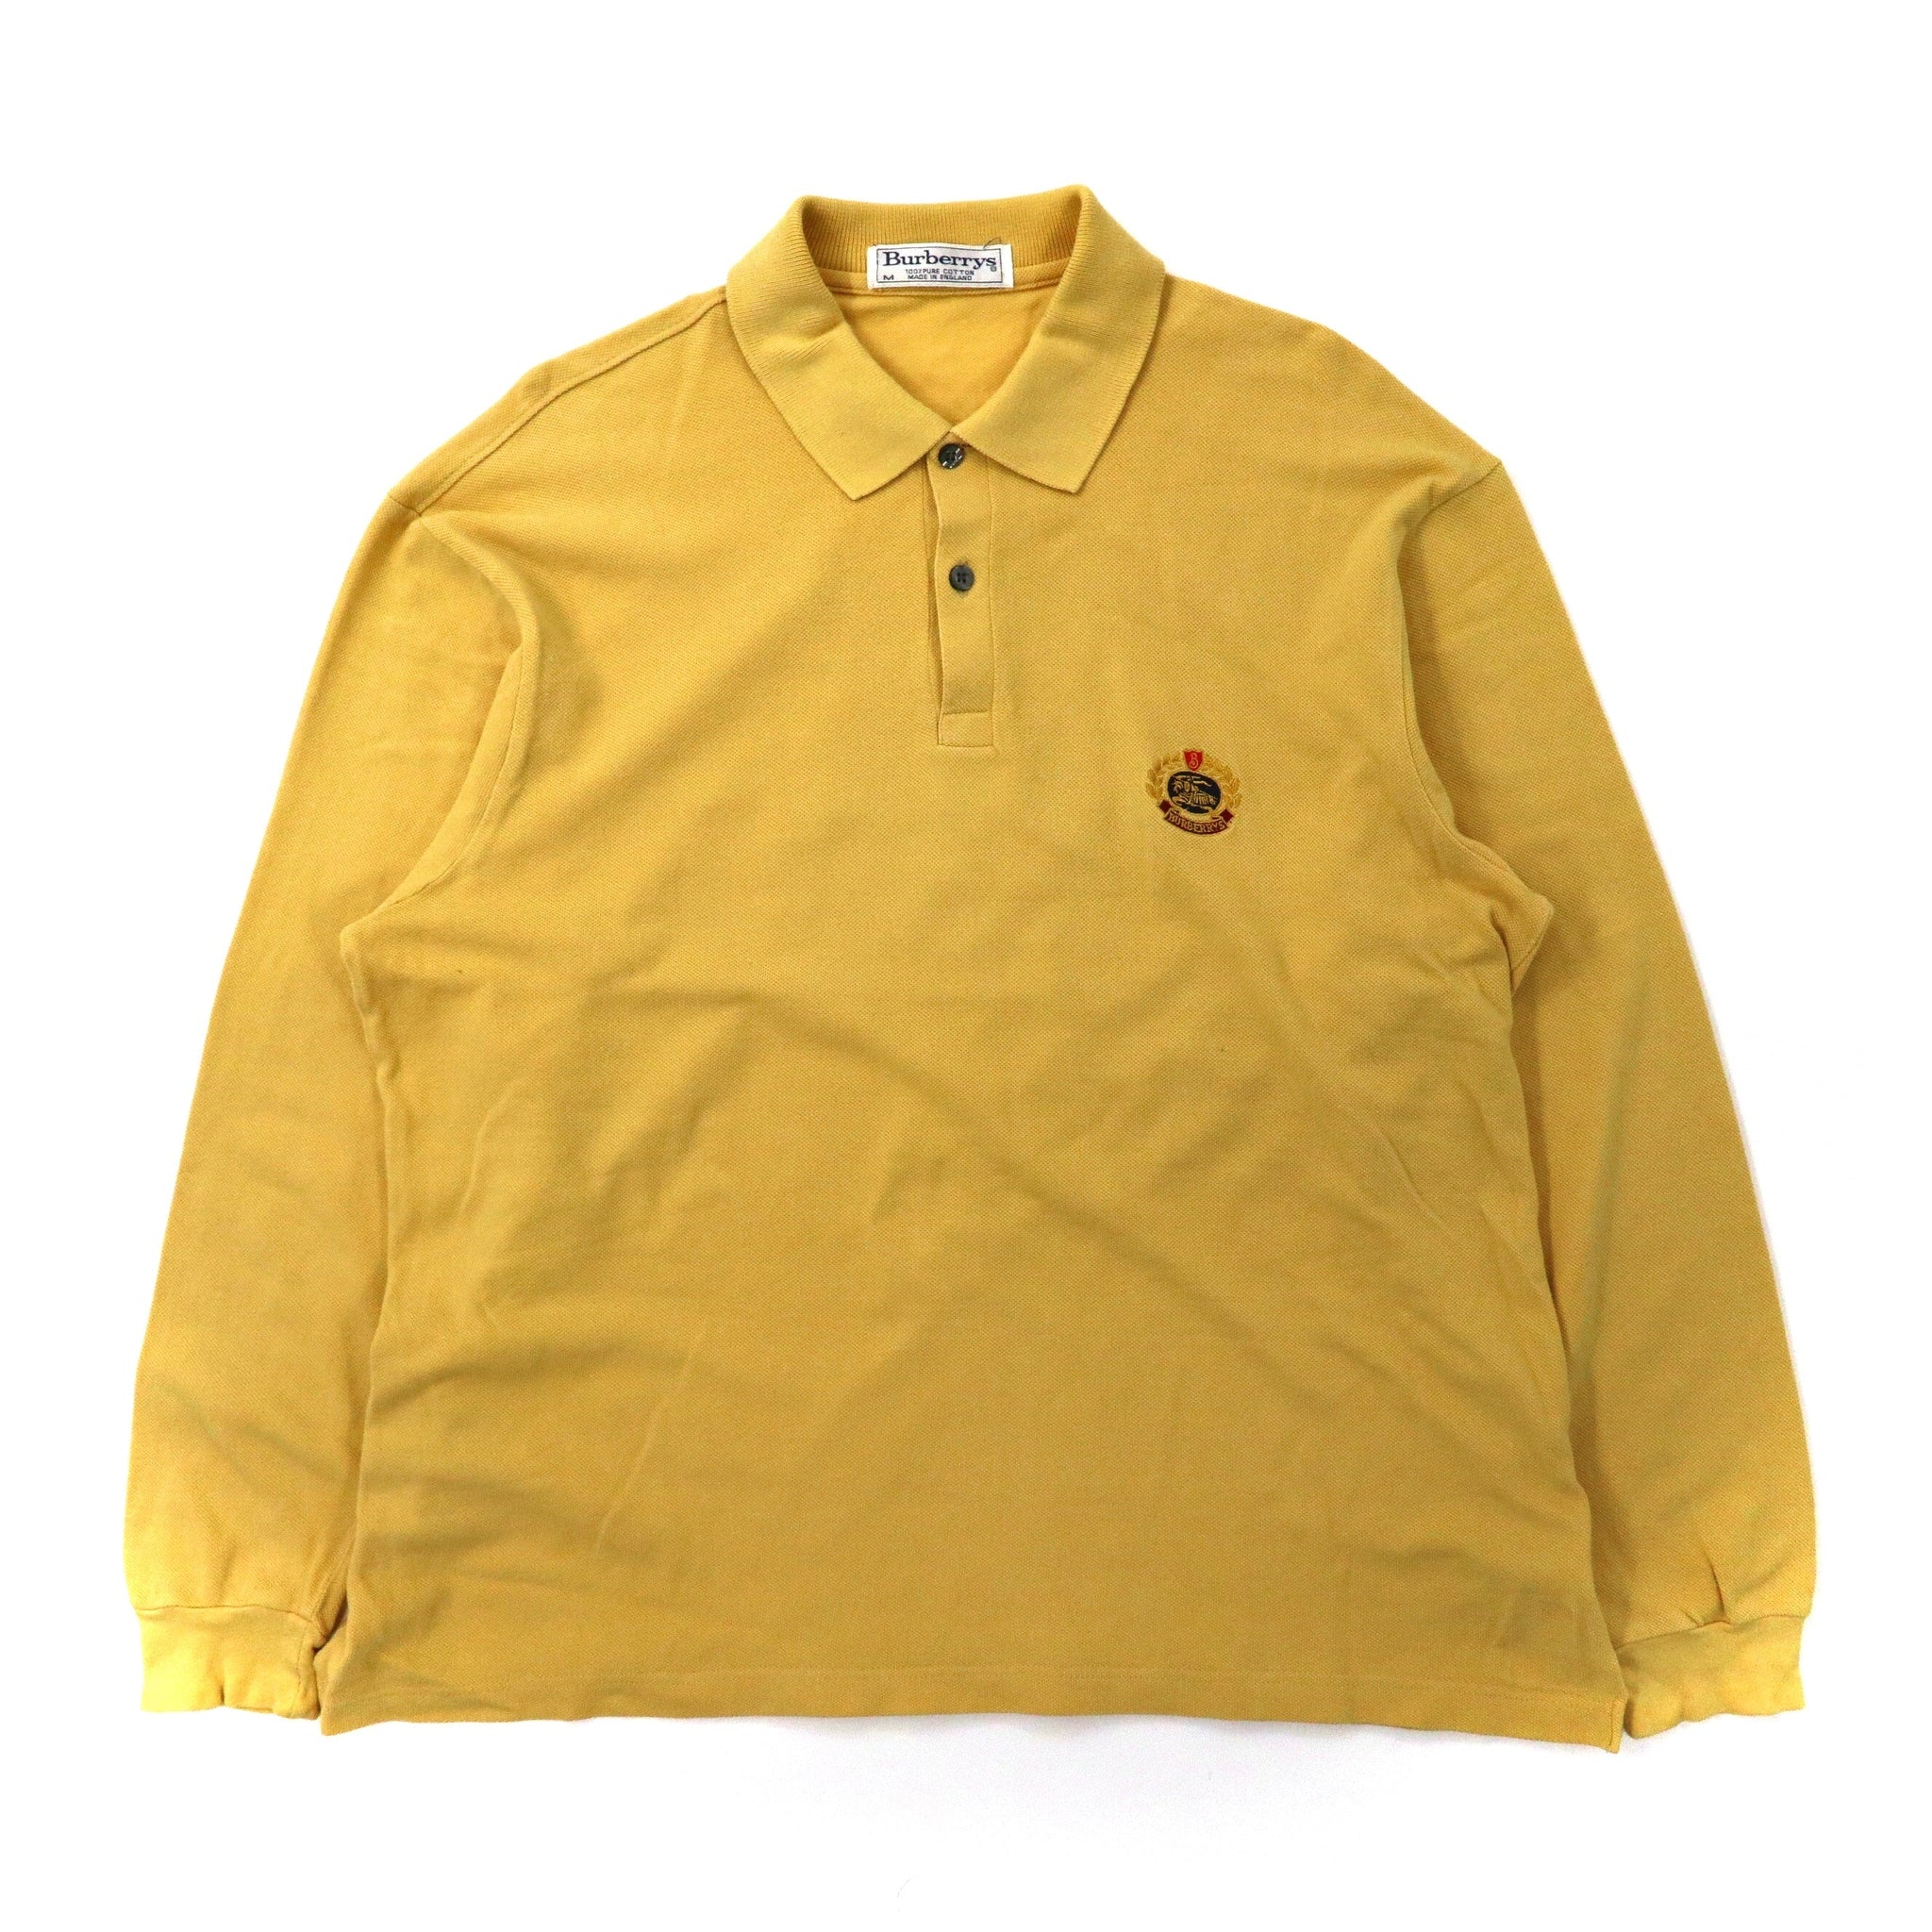 BURBERRYS Long Sleeve Polo Shirt M Yellow Logo Embroidery England